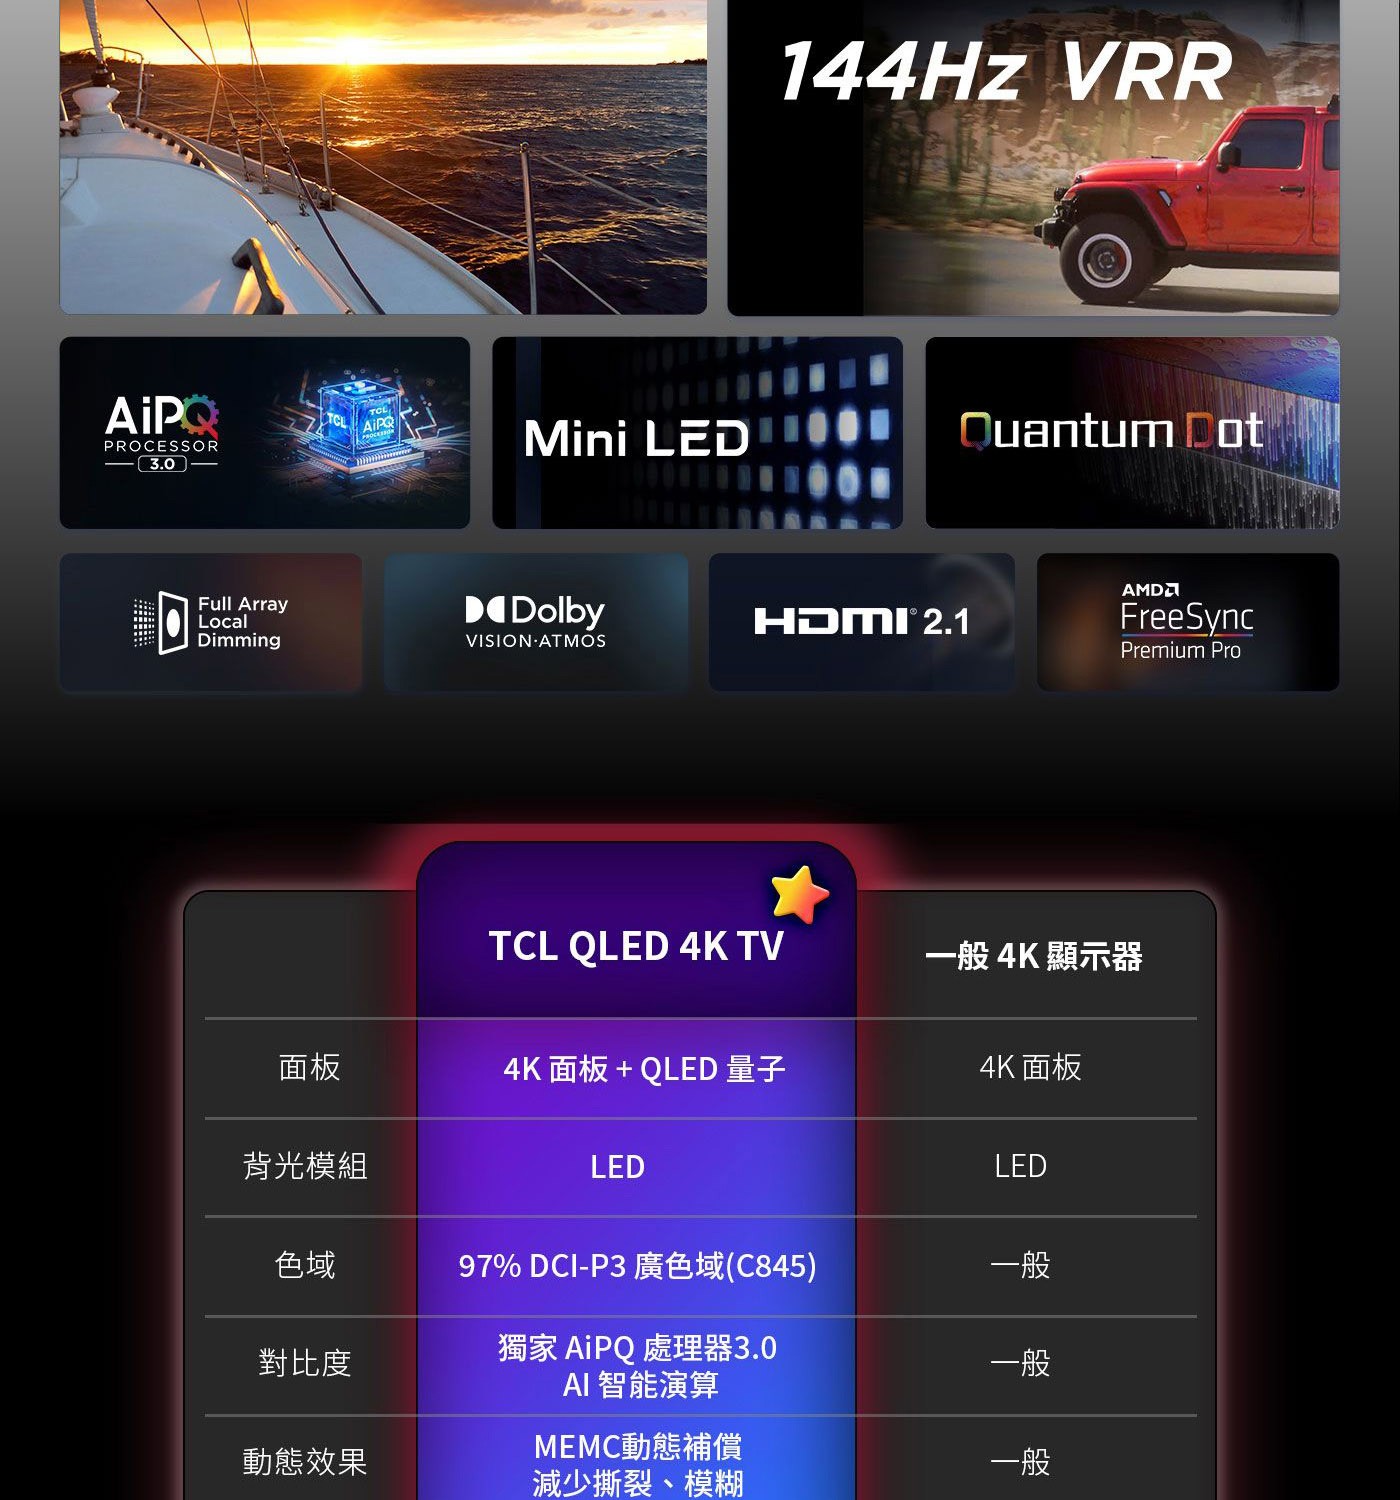 TCL 55吋 4K Mini LED QLED Google TV 量子智能連網液晶顯示器 55C845 HDR 2000 nits璀璨亮度 驚艷奪目